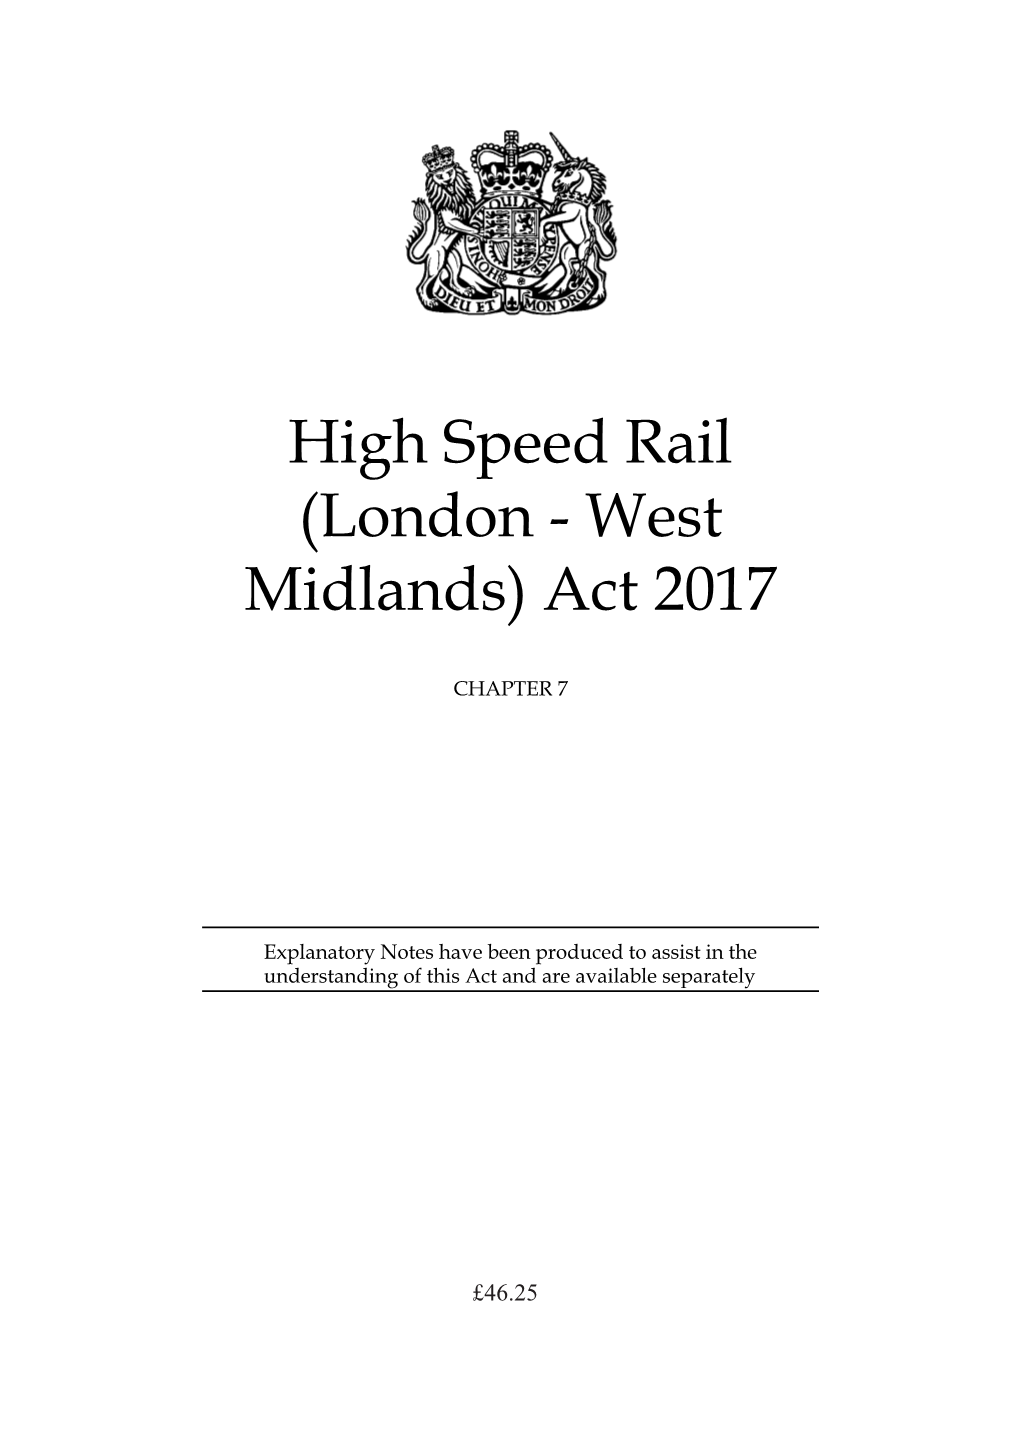 High Speed Rail (London - West Midlands) Act 2017